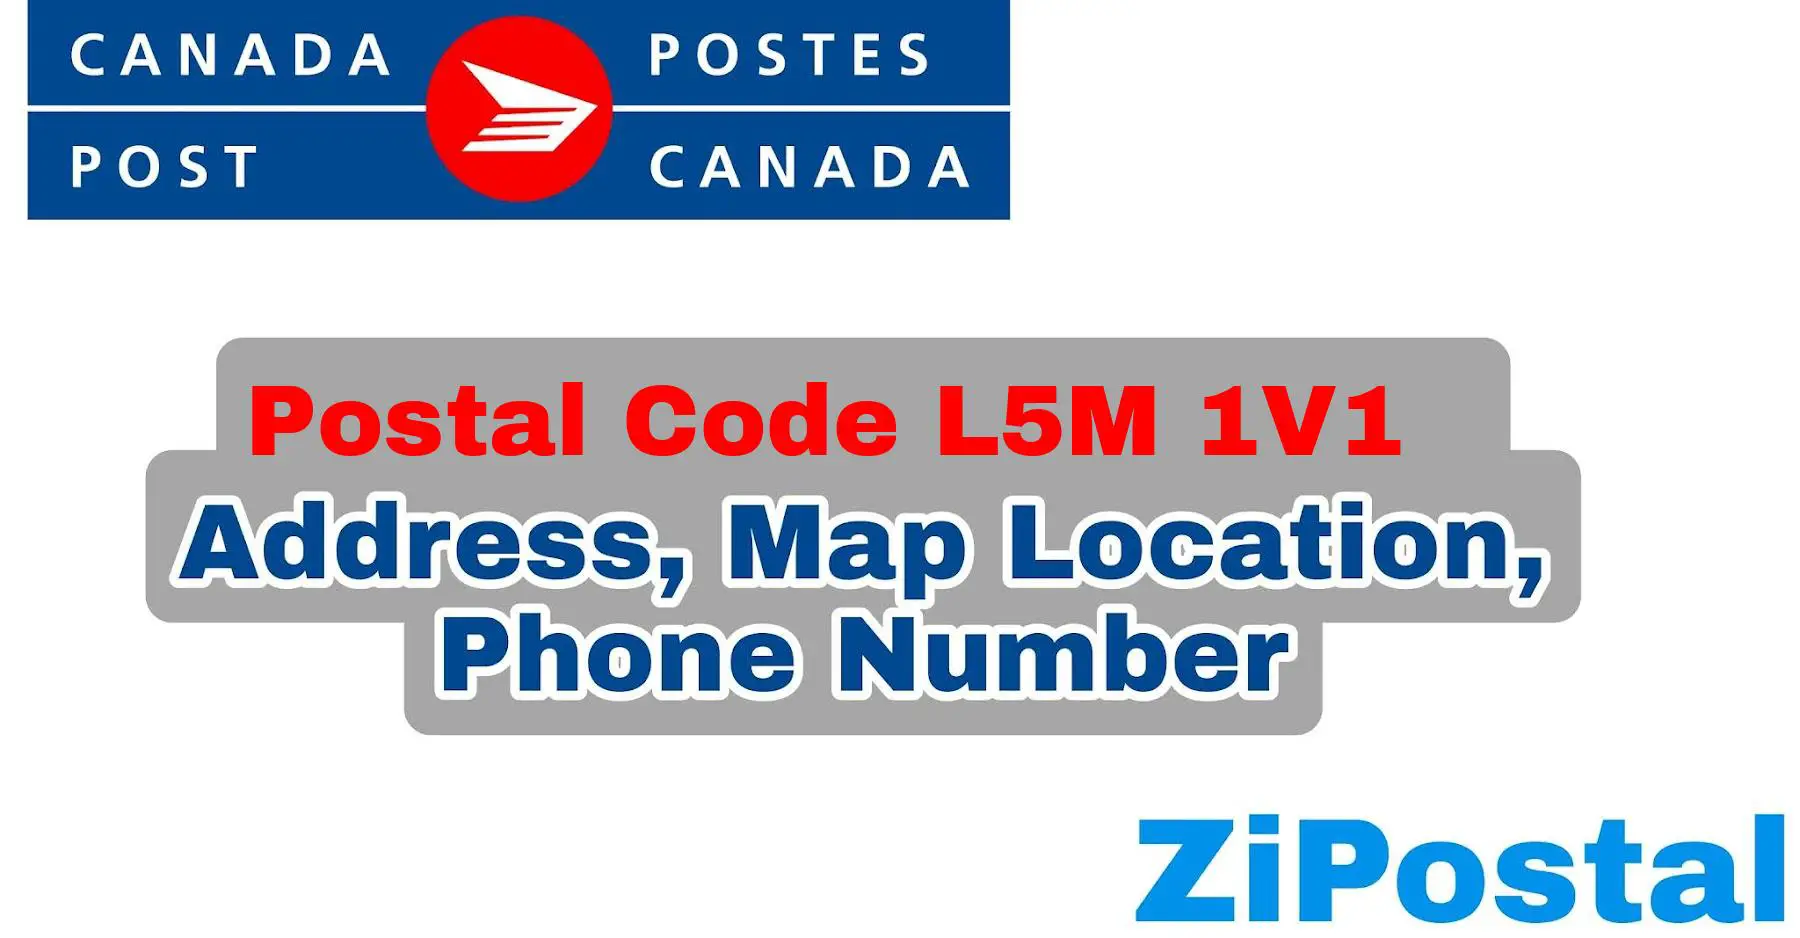 Postal Code L5M 1V1 Address Map Location and Phone Number